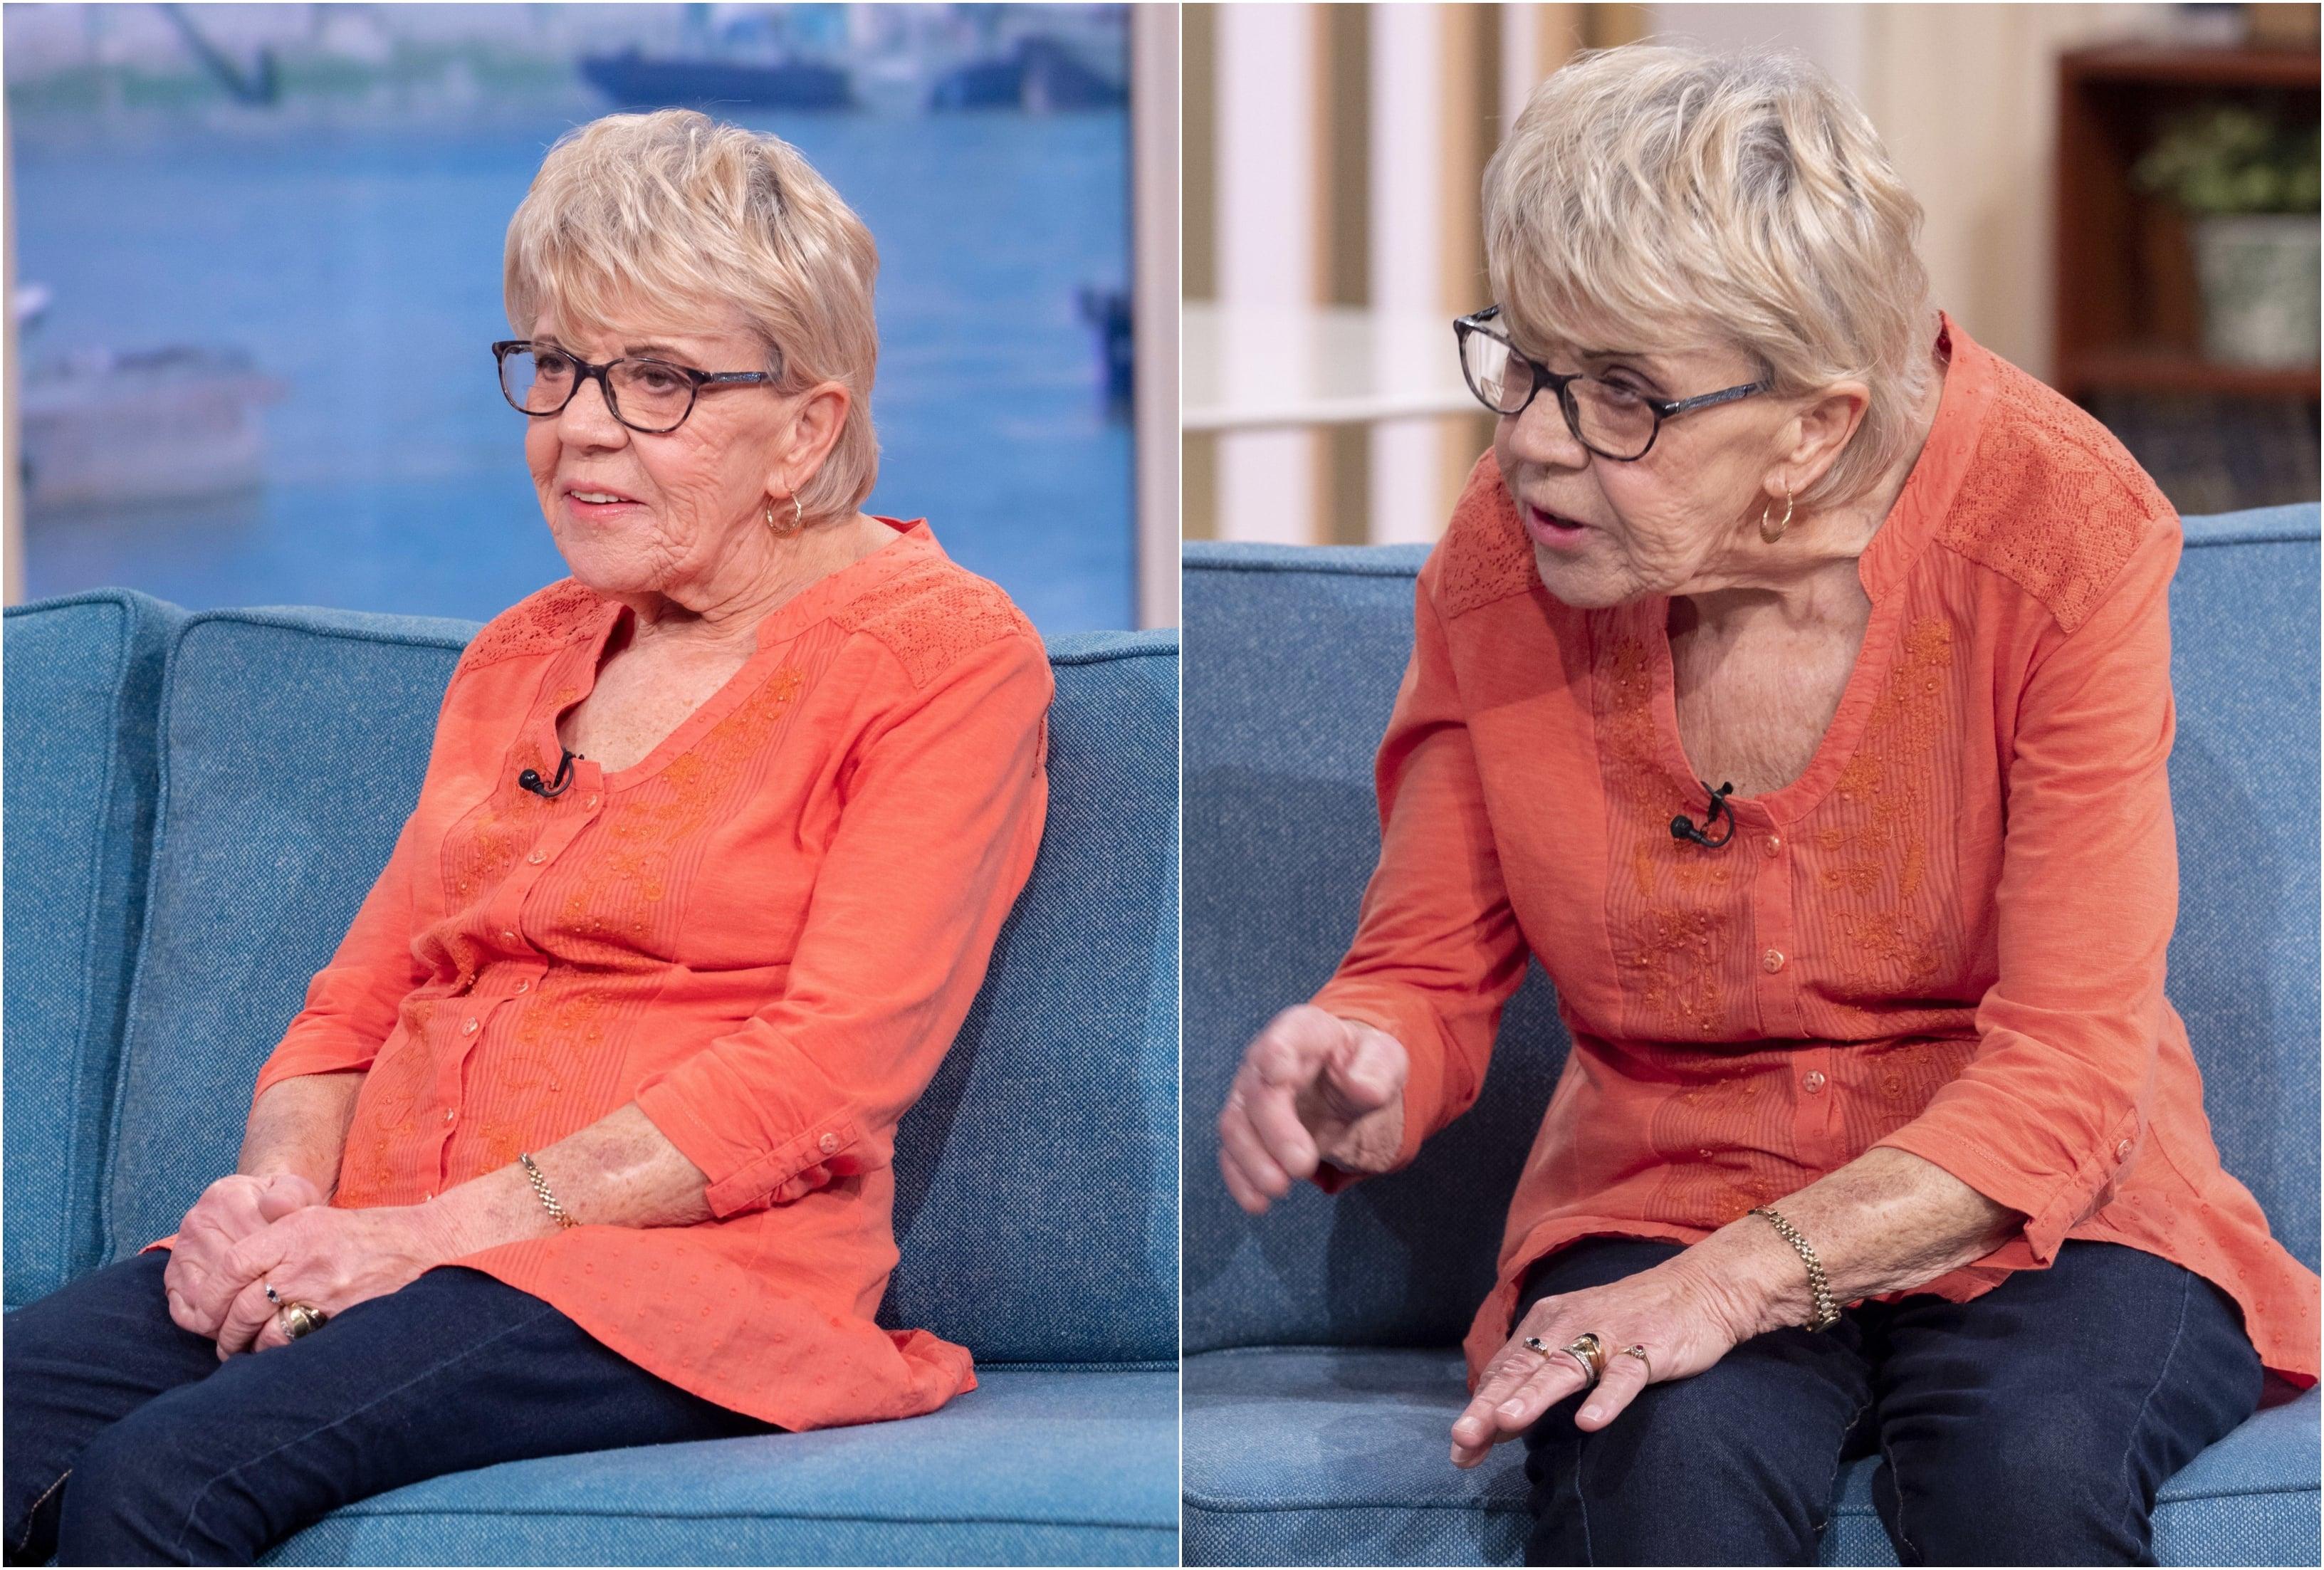 Colaj Iris, bunica de 81 de ani, emisiune, bluza portocalie